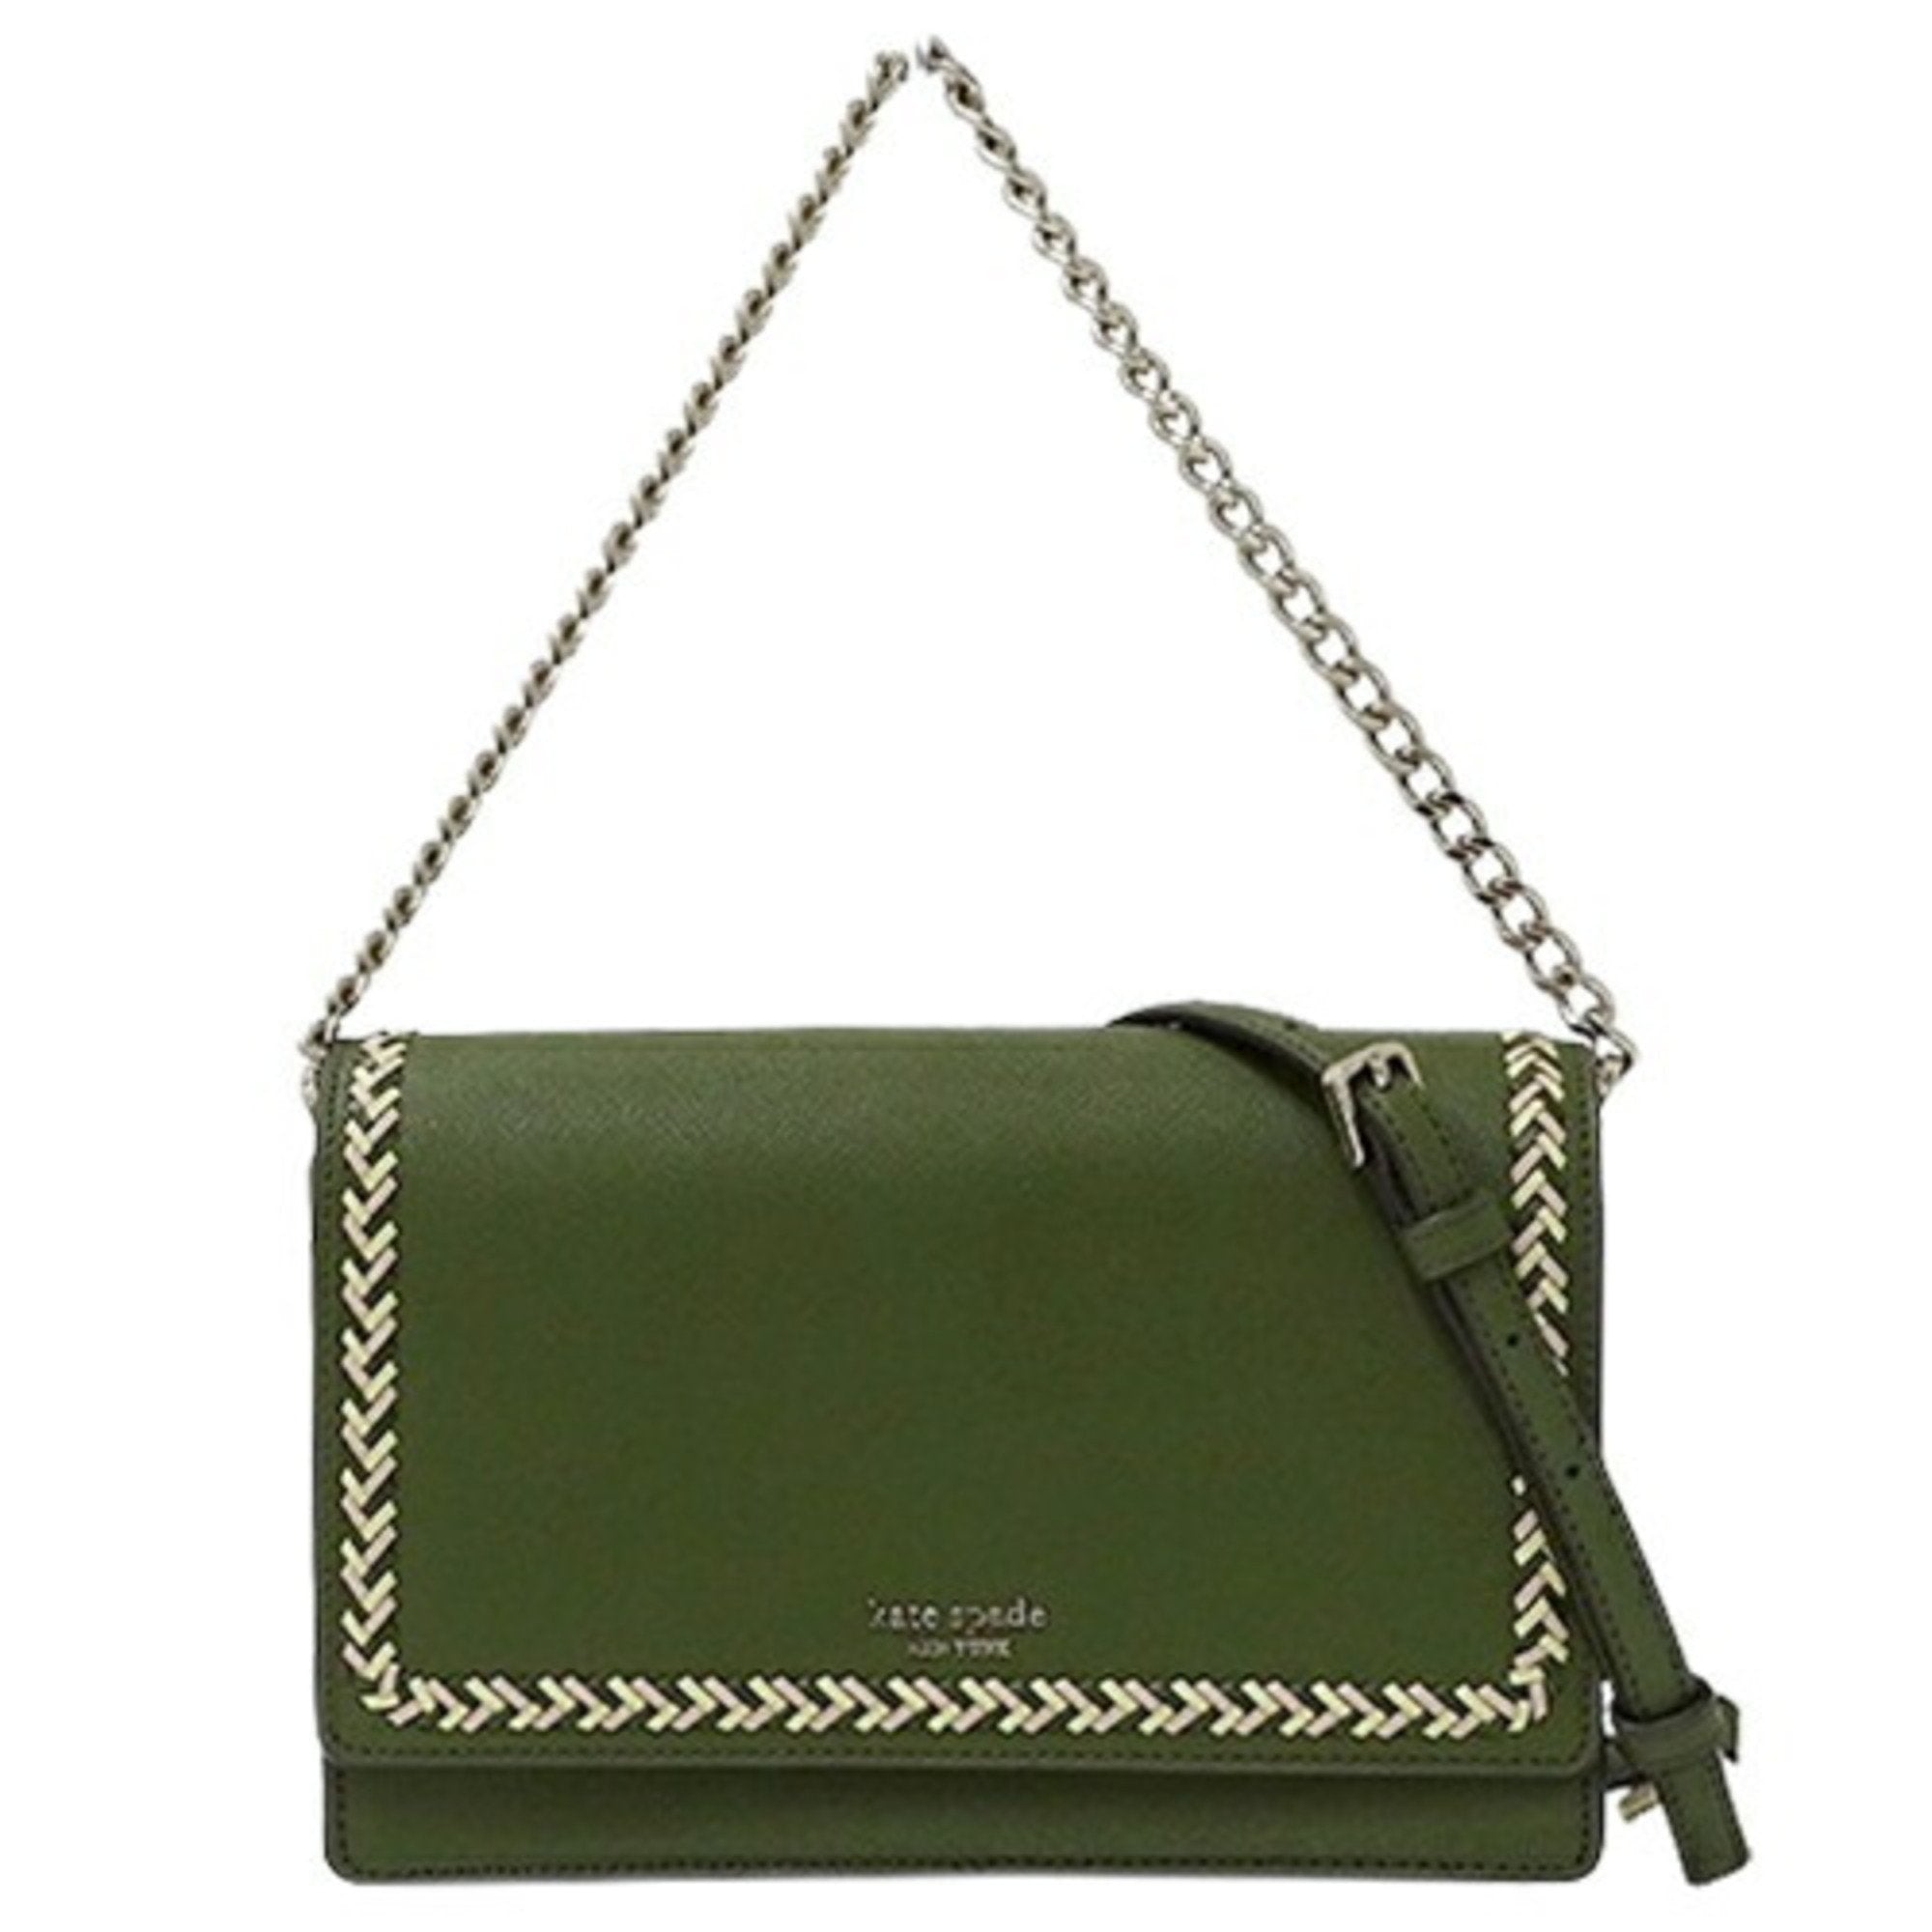 New York Bag Women's Brand Handbag Shoulder 2way Leather